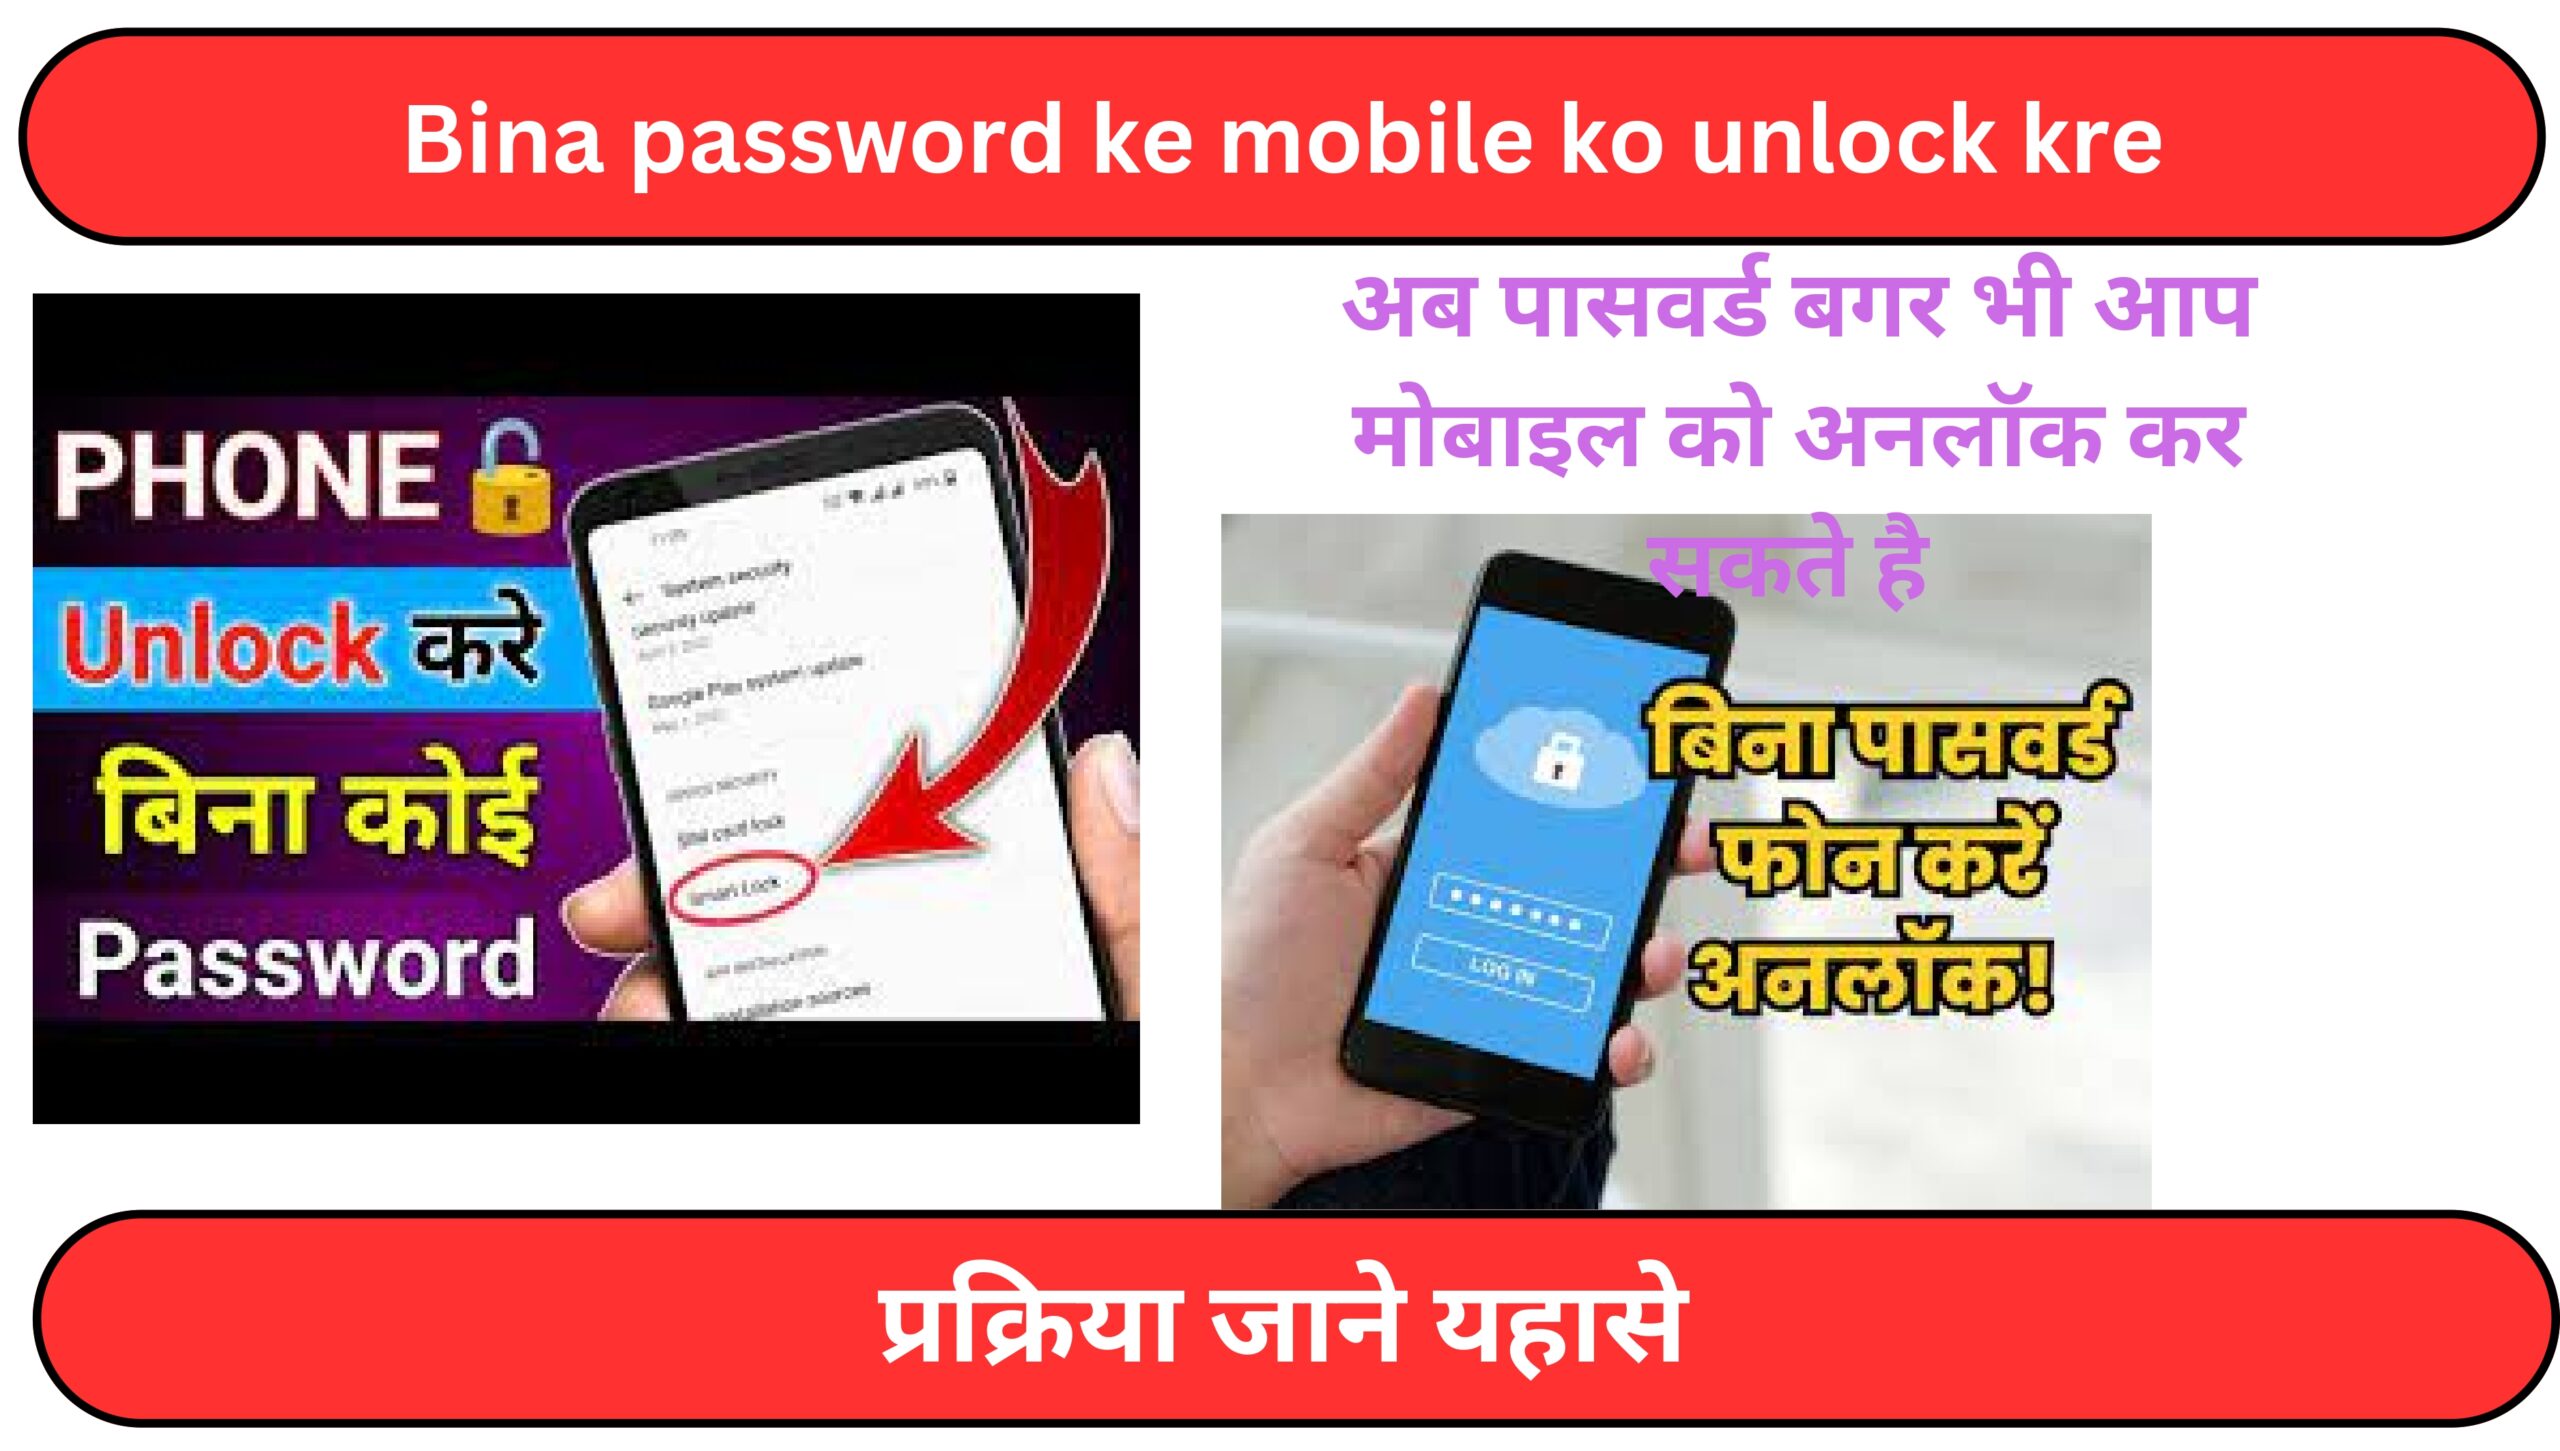 Bina password ke mobile ko unlock kre